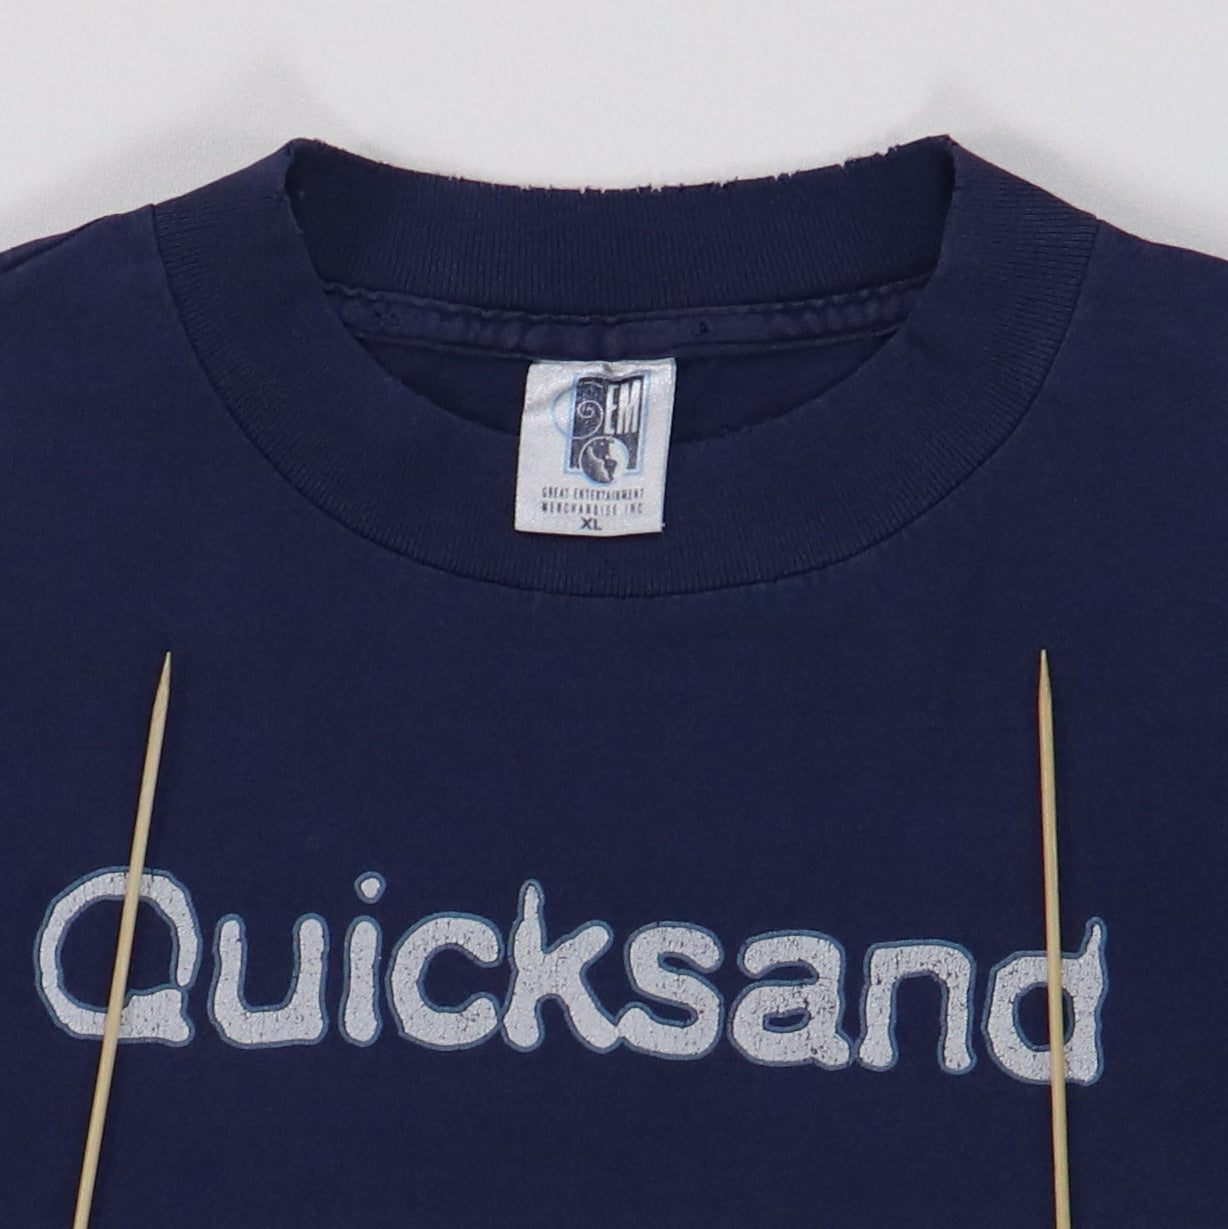 1995 Quicksand Manic Compression Shirt